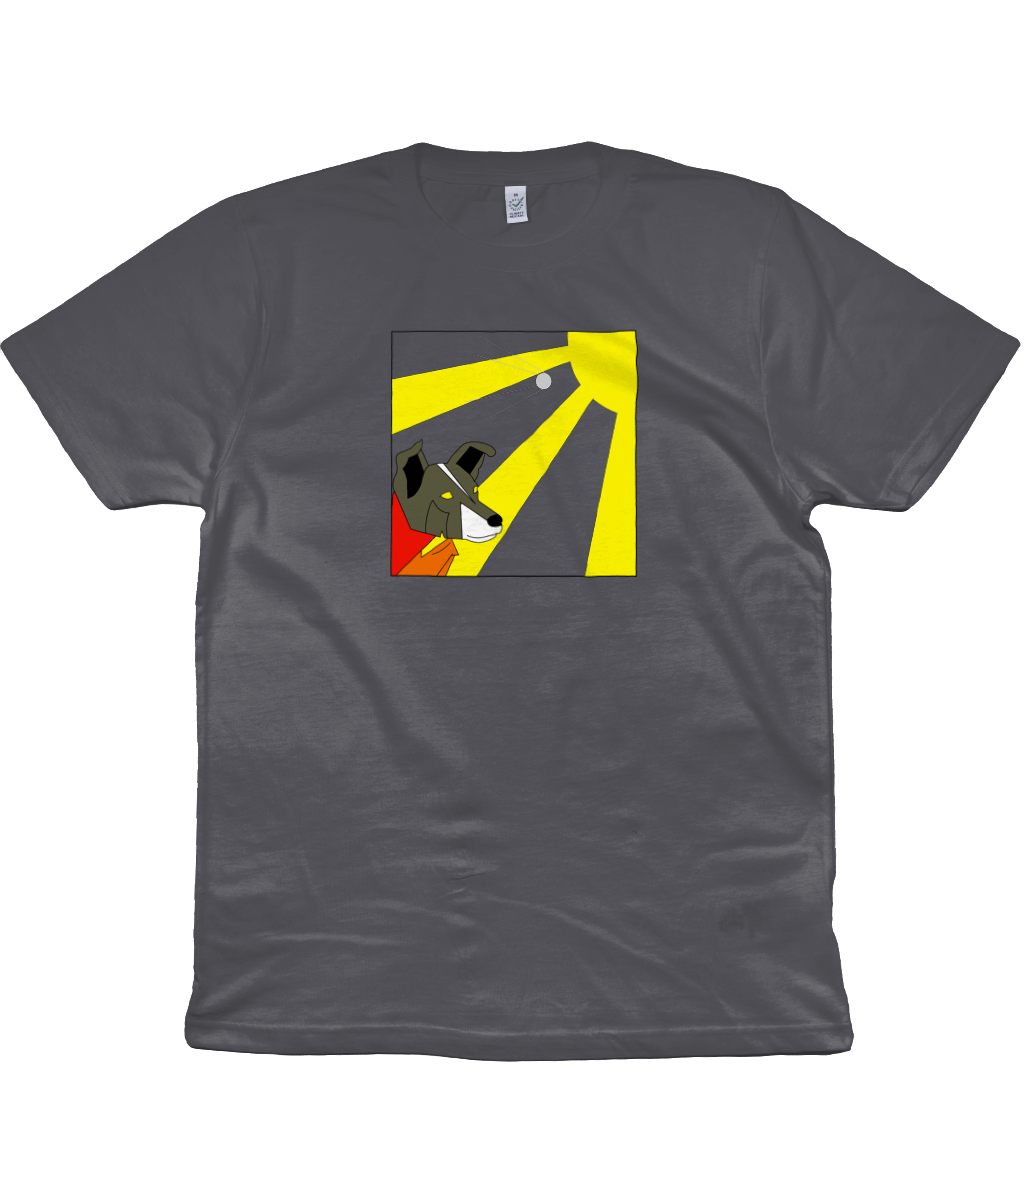 Laika57 Unisex T-Shirt